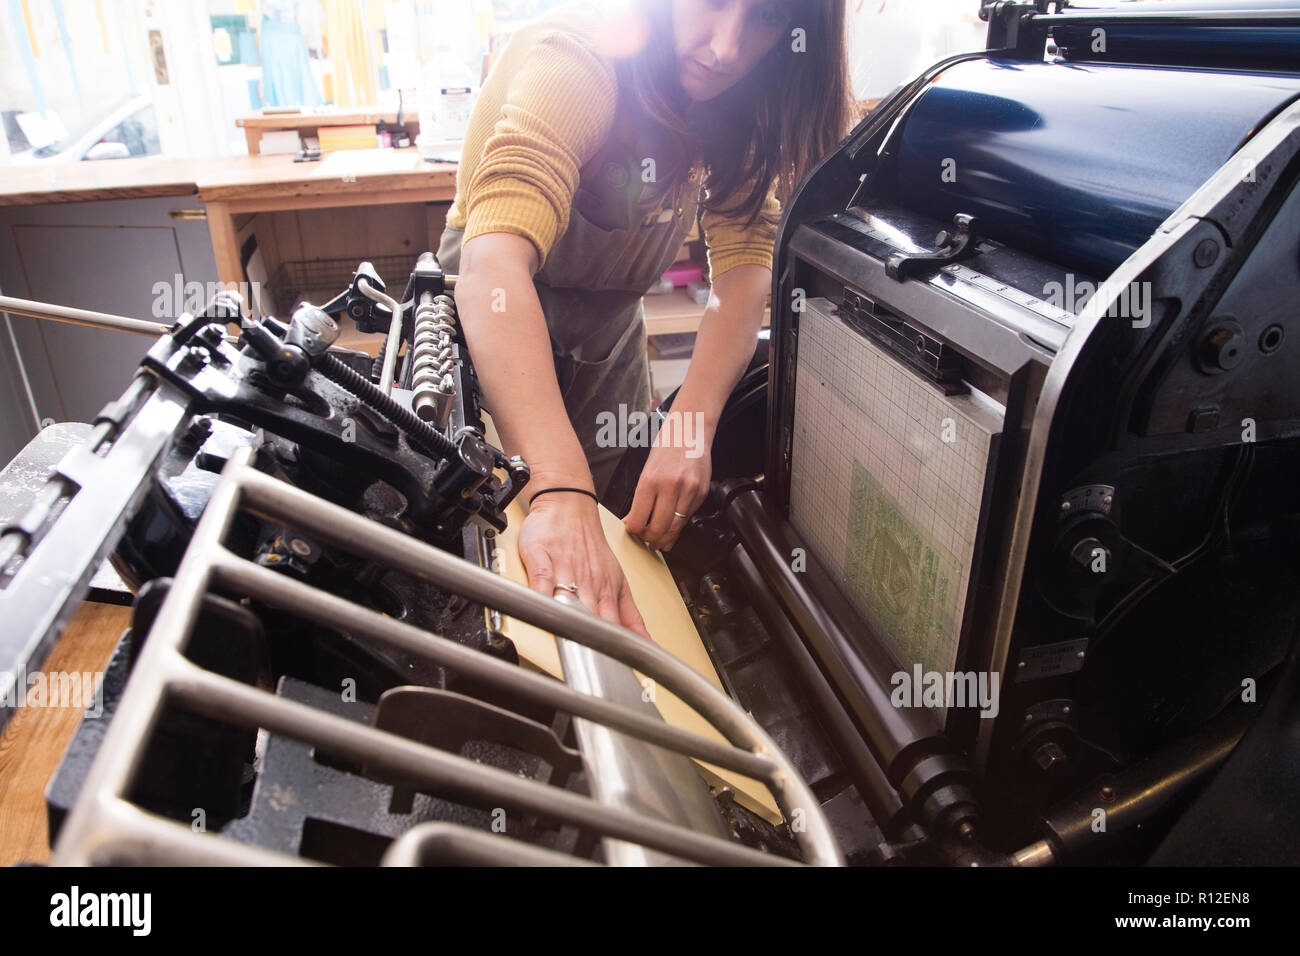 Woman preparing printer in shop Stock Photo